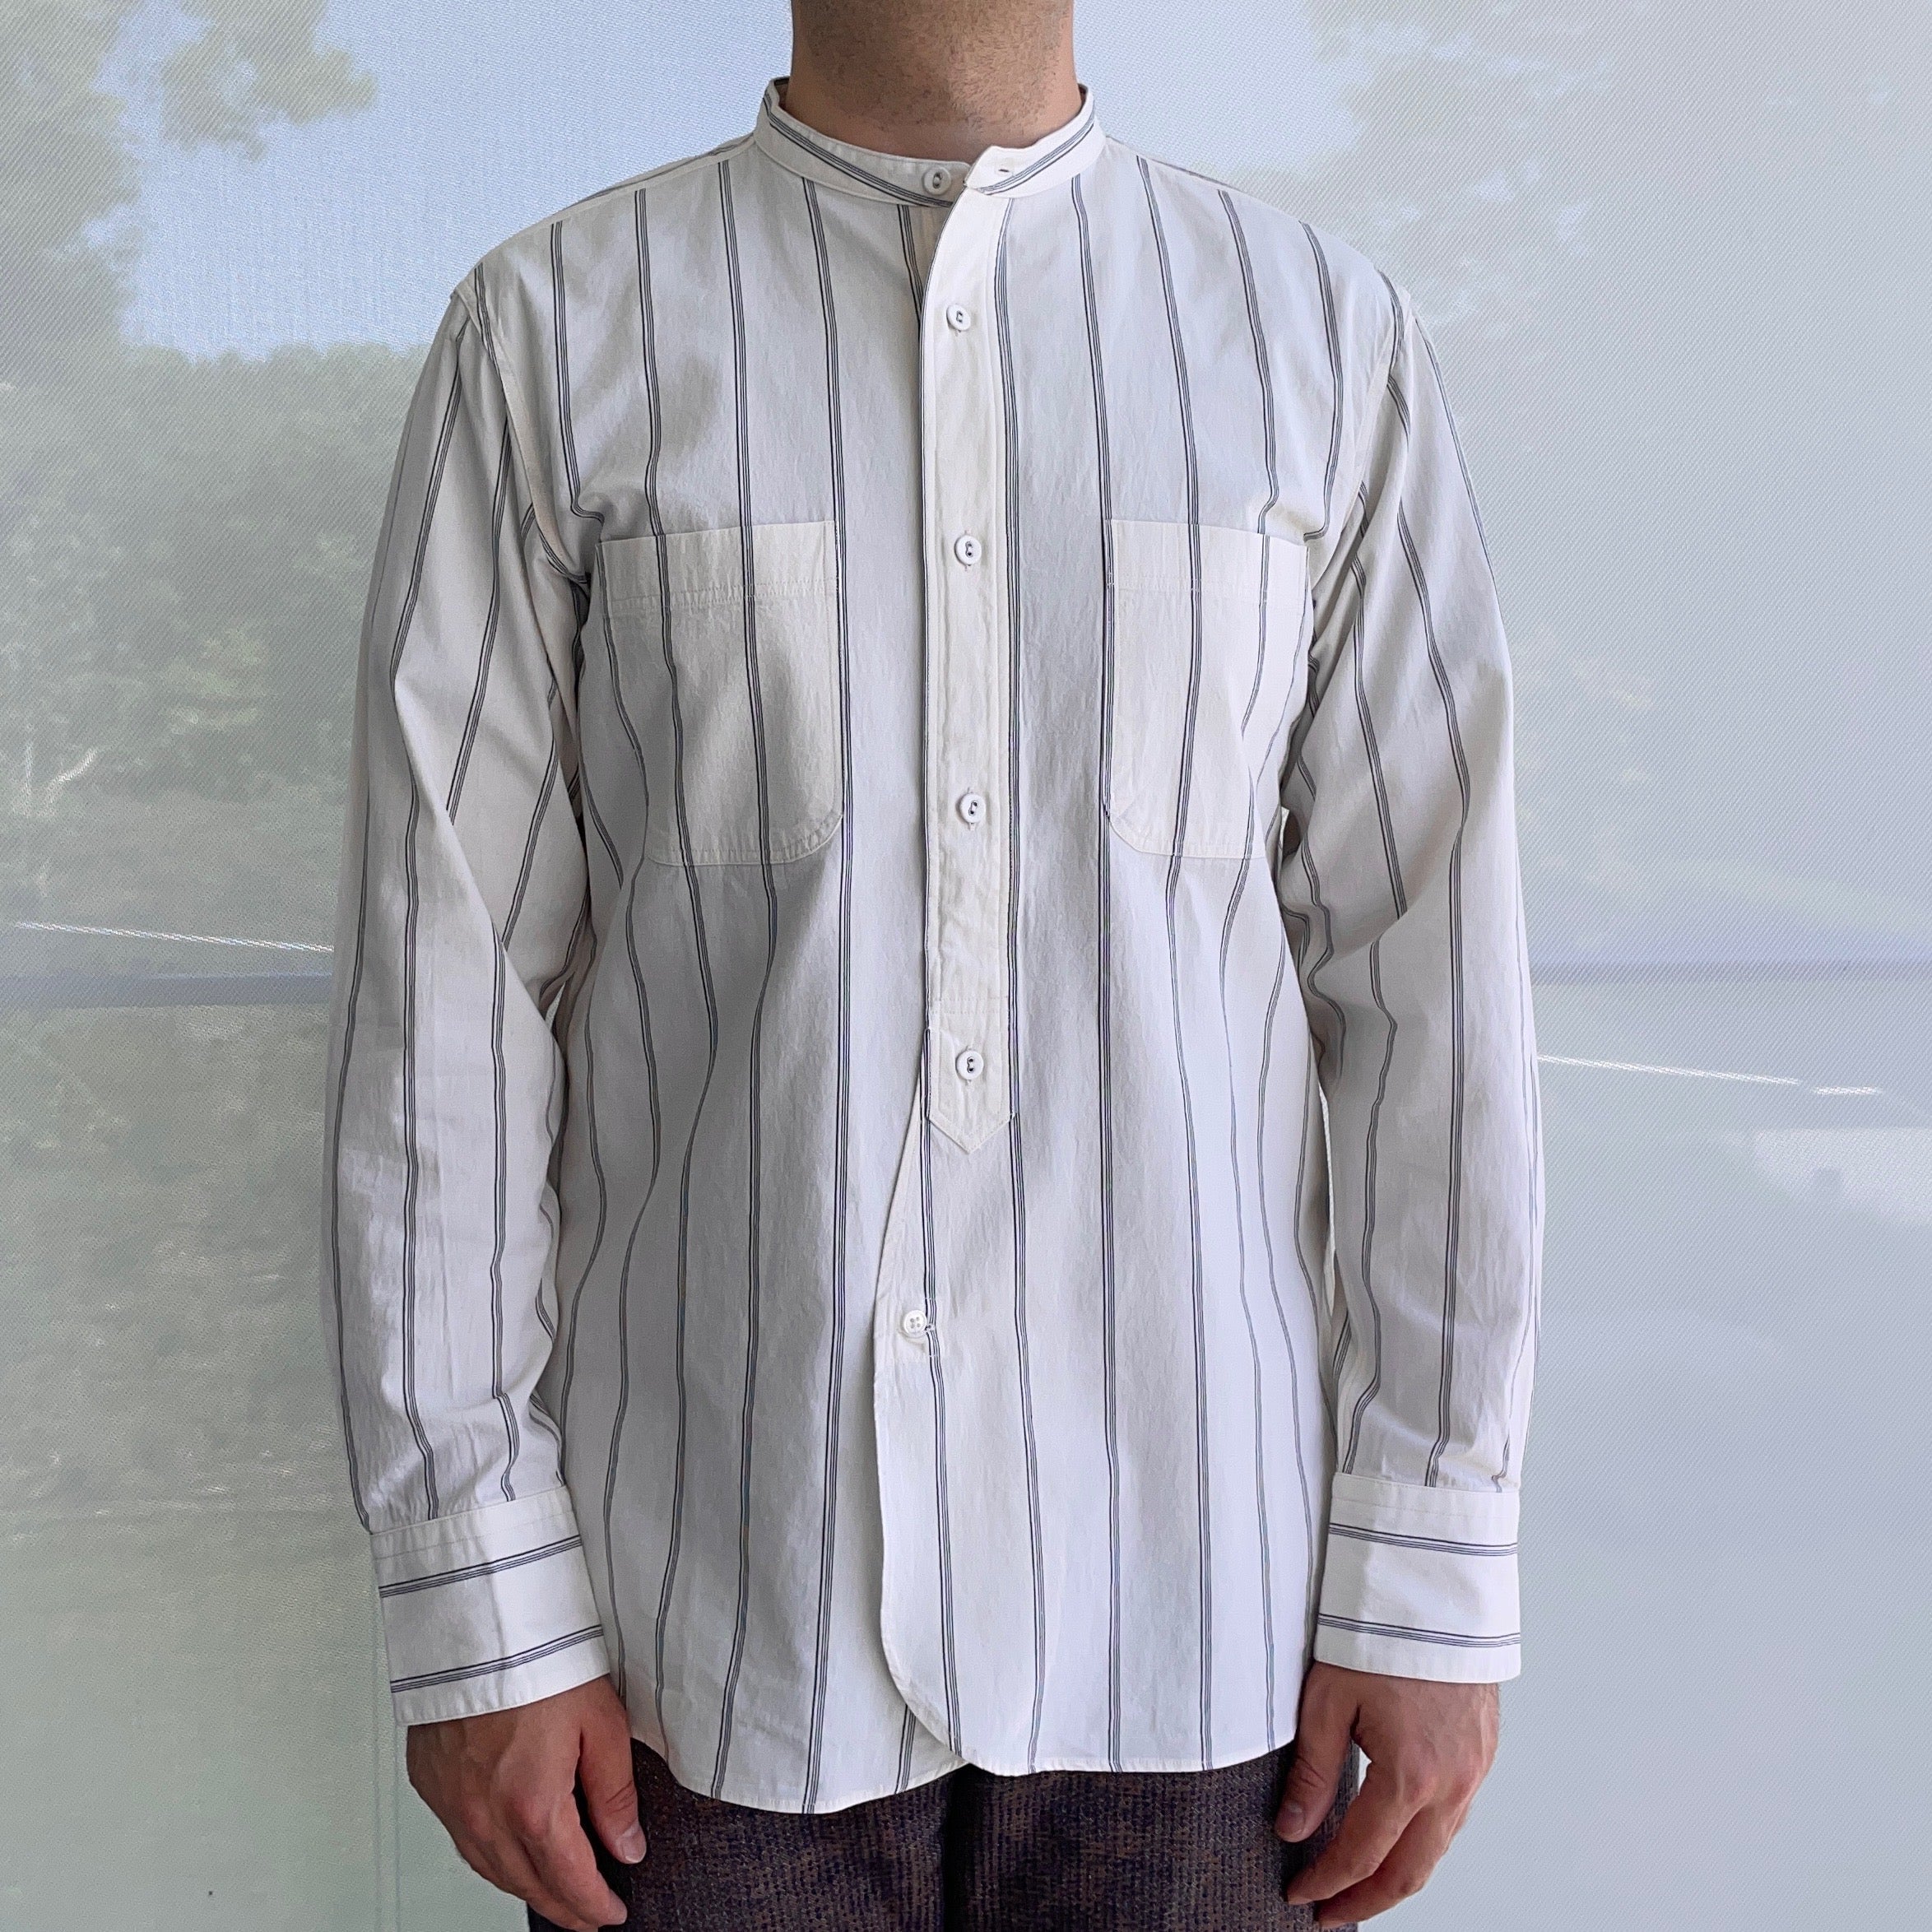 "Livingstone" Cotton Shirt in White Blue Black Stripe